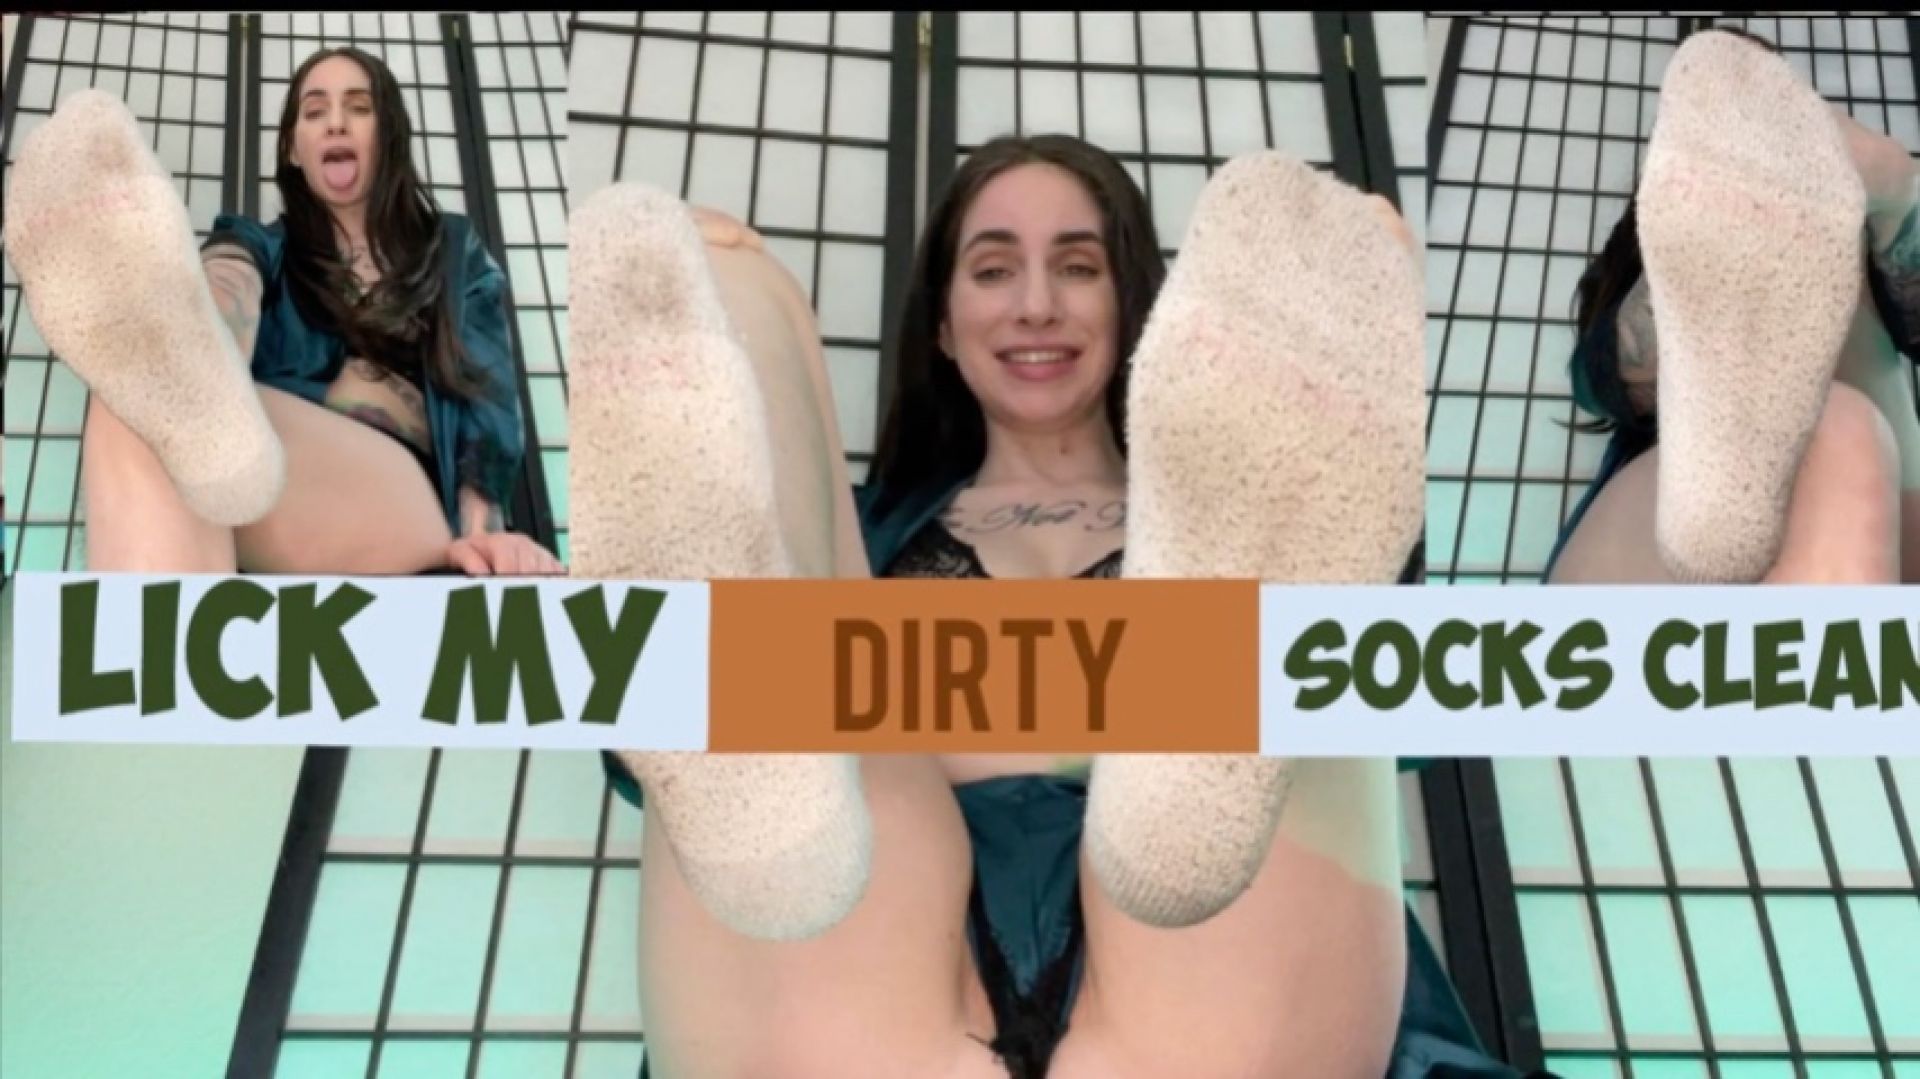 Lick my dirty socks clean